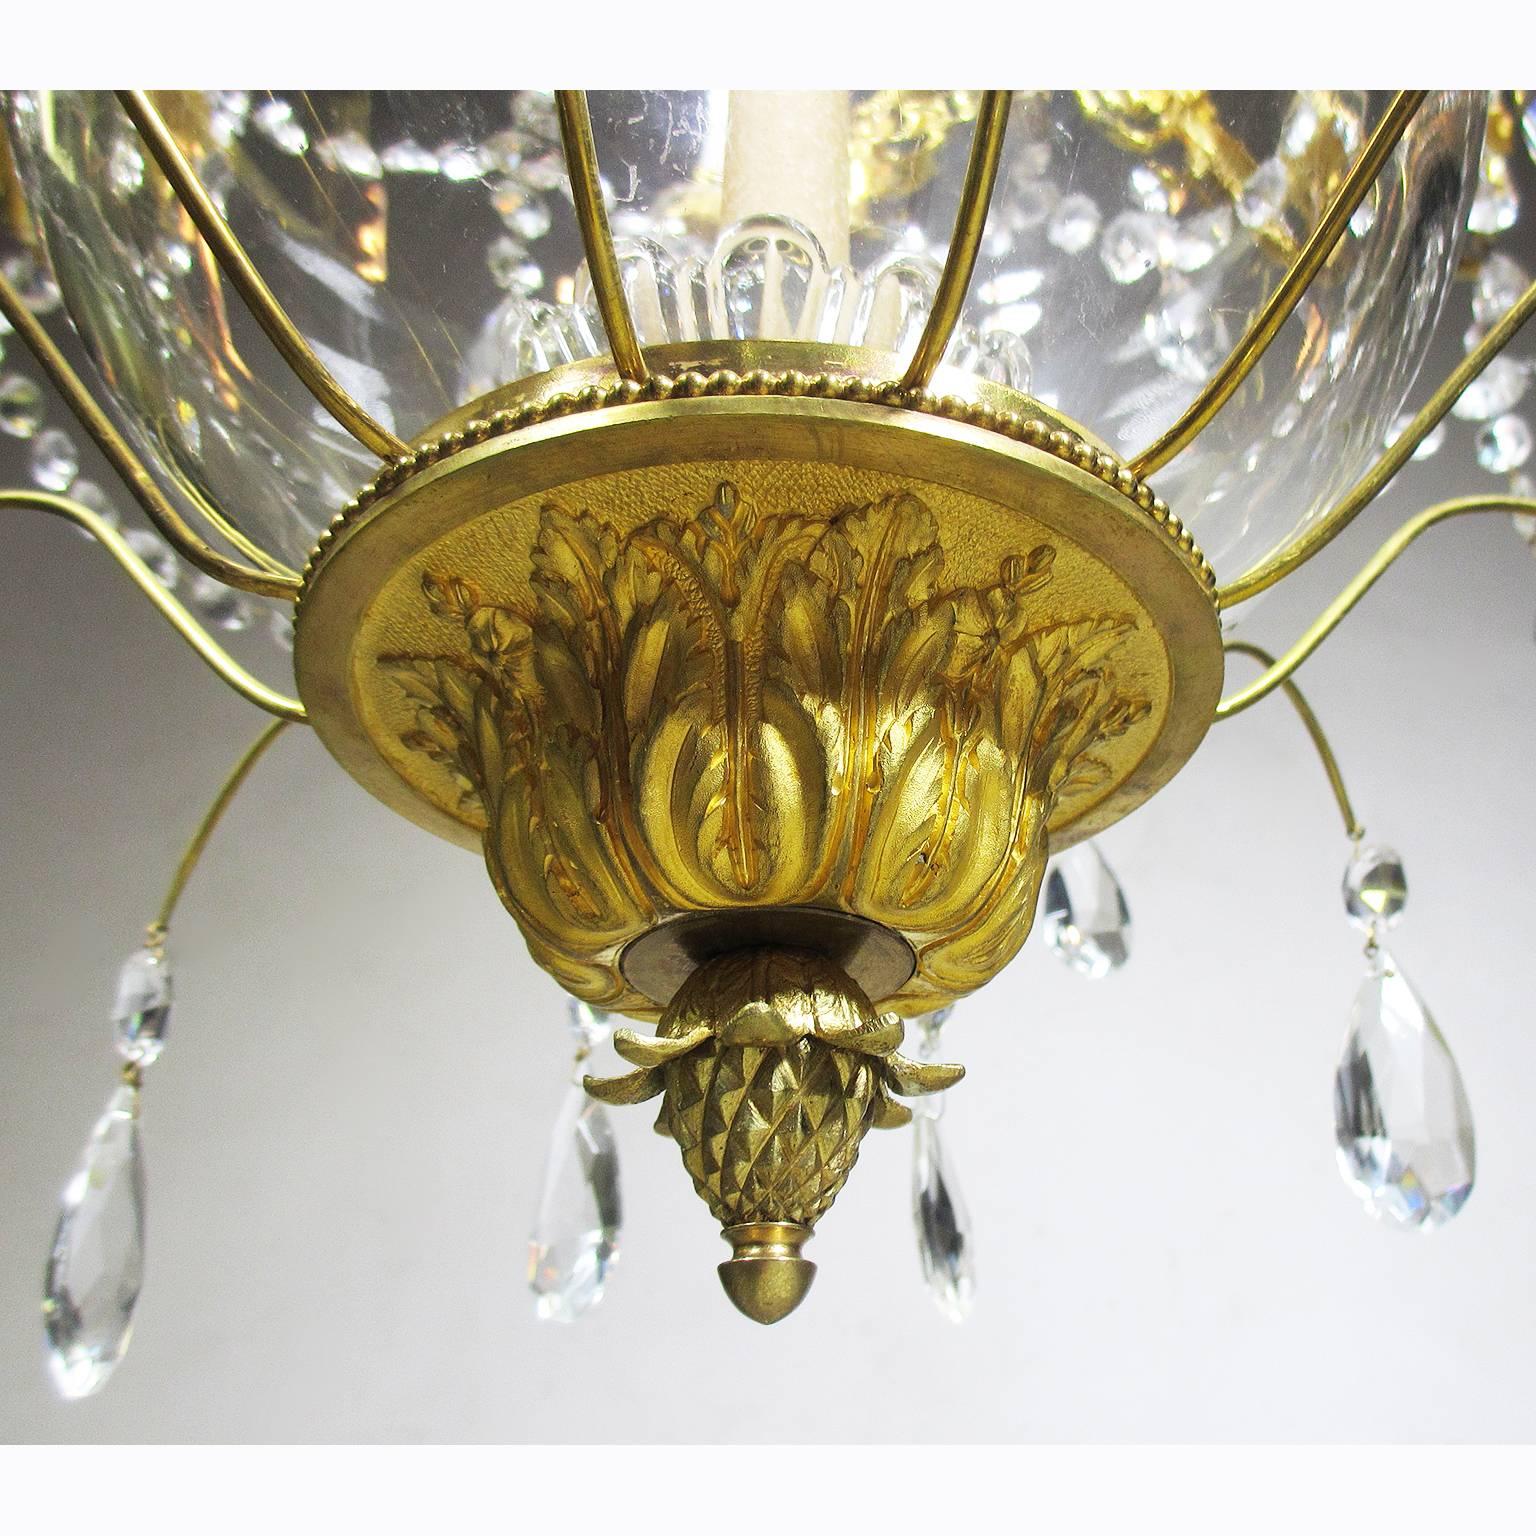 19th Century Louis XV Style Ormolu and Cut-Glass Chandelier by Mottheau et Fils For Sale 3